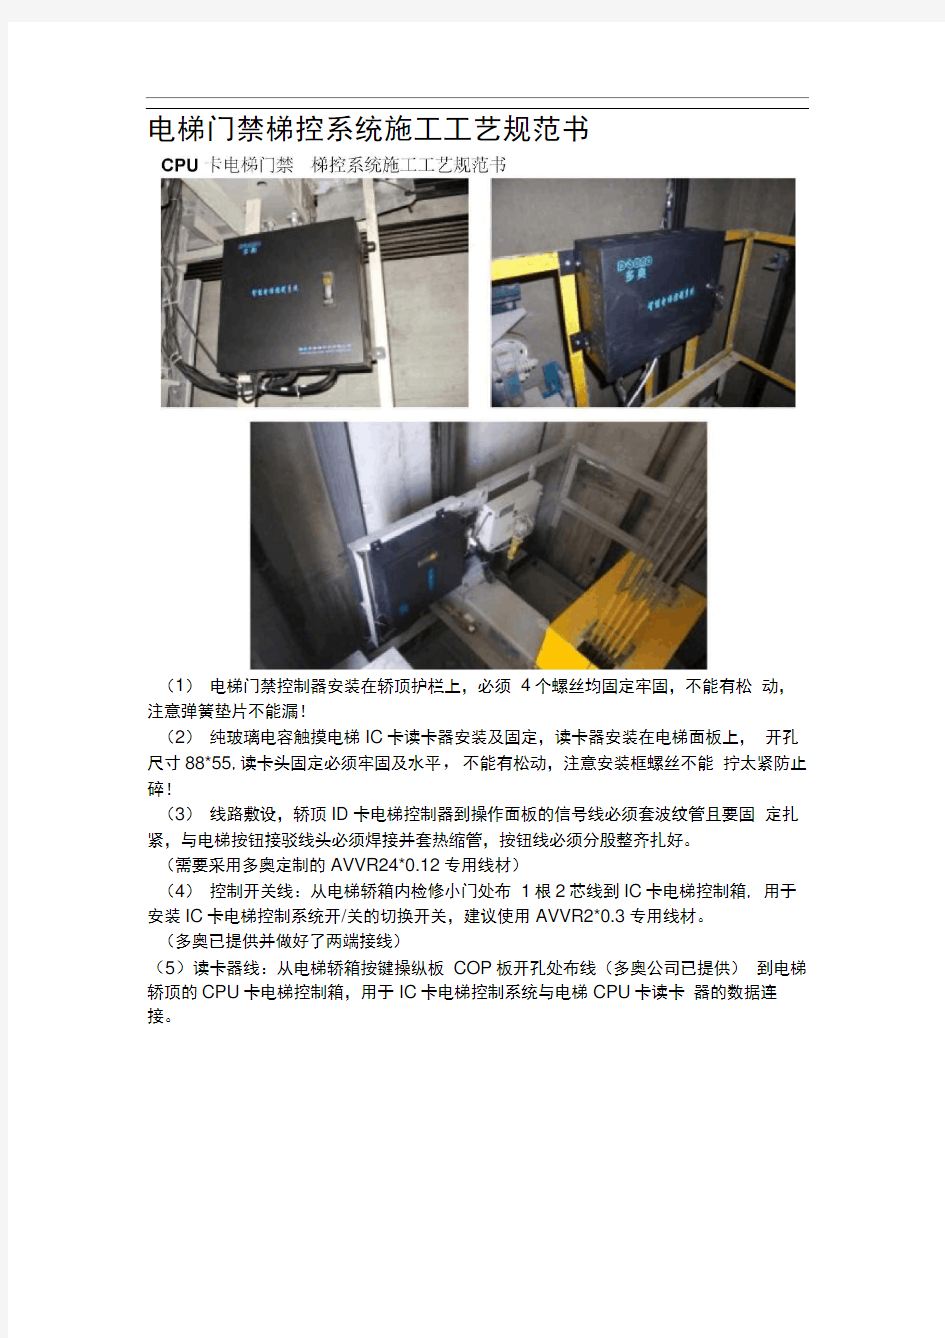 IC卡电梯刷卡轿厢内门禁即梯控系统安装施工布线工艺规范书